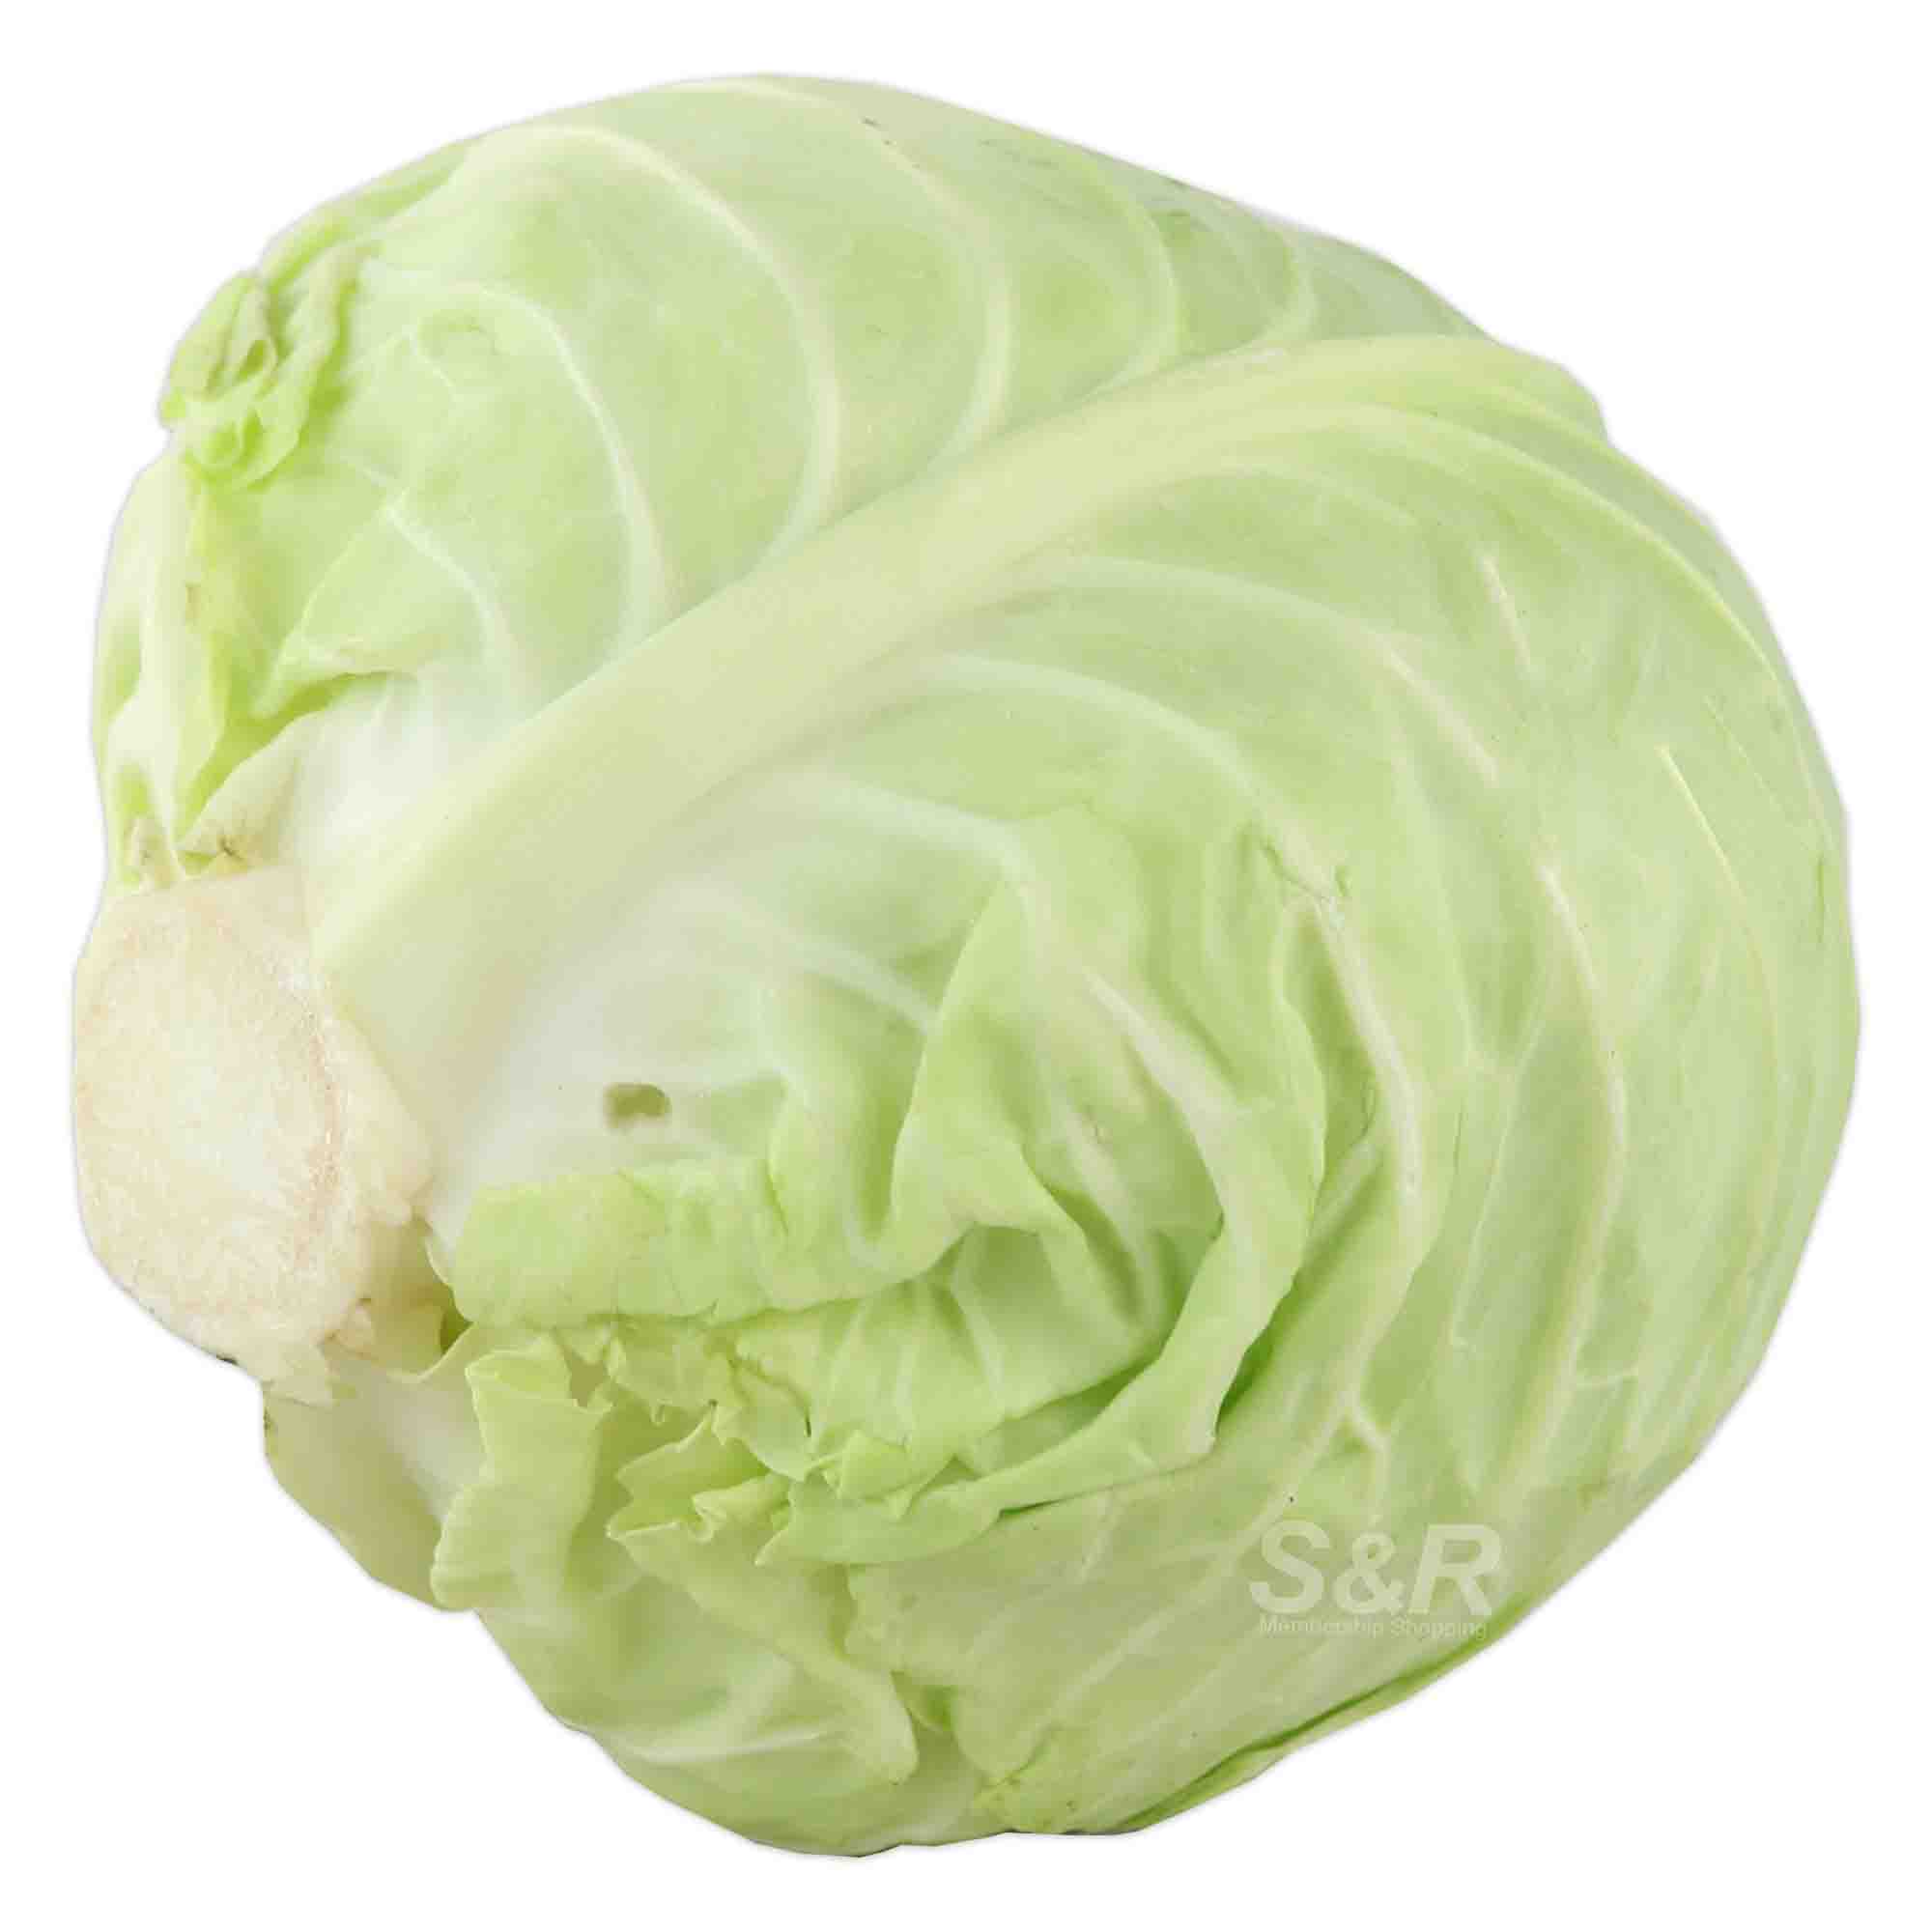 S&R Scorpio Cabbage approx. 1.3kg